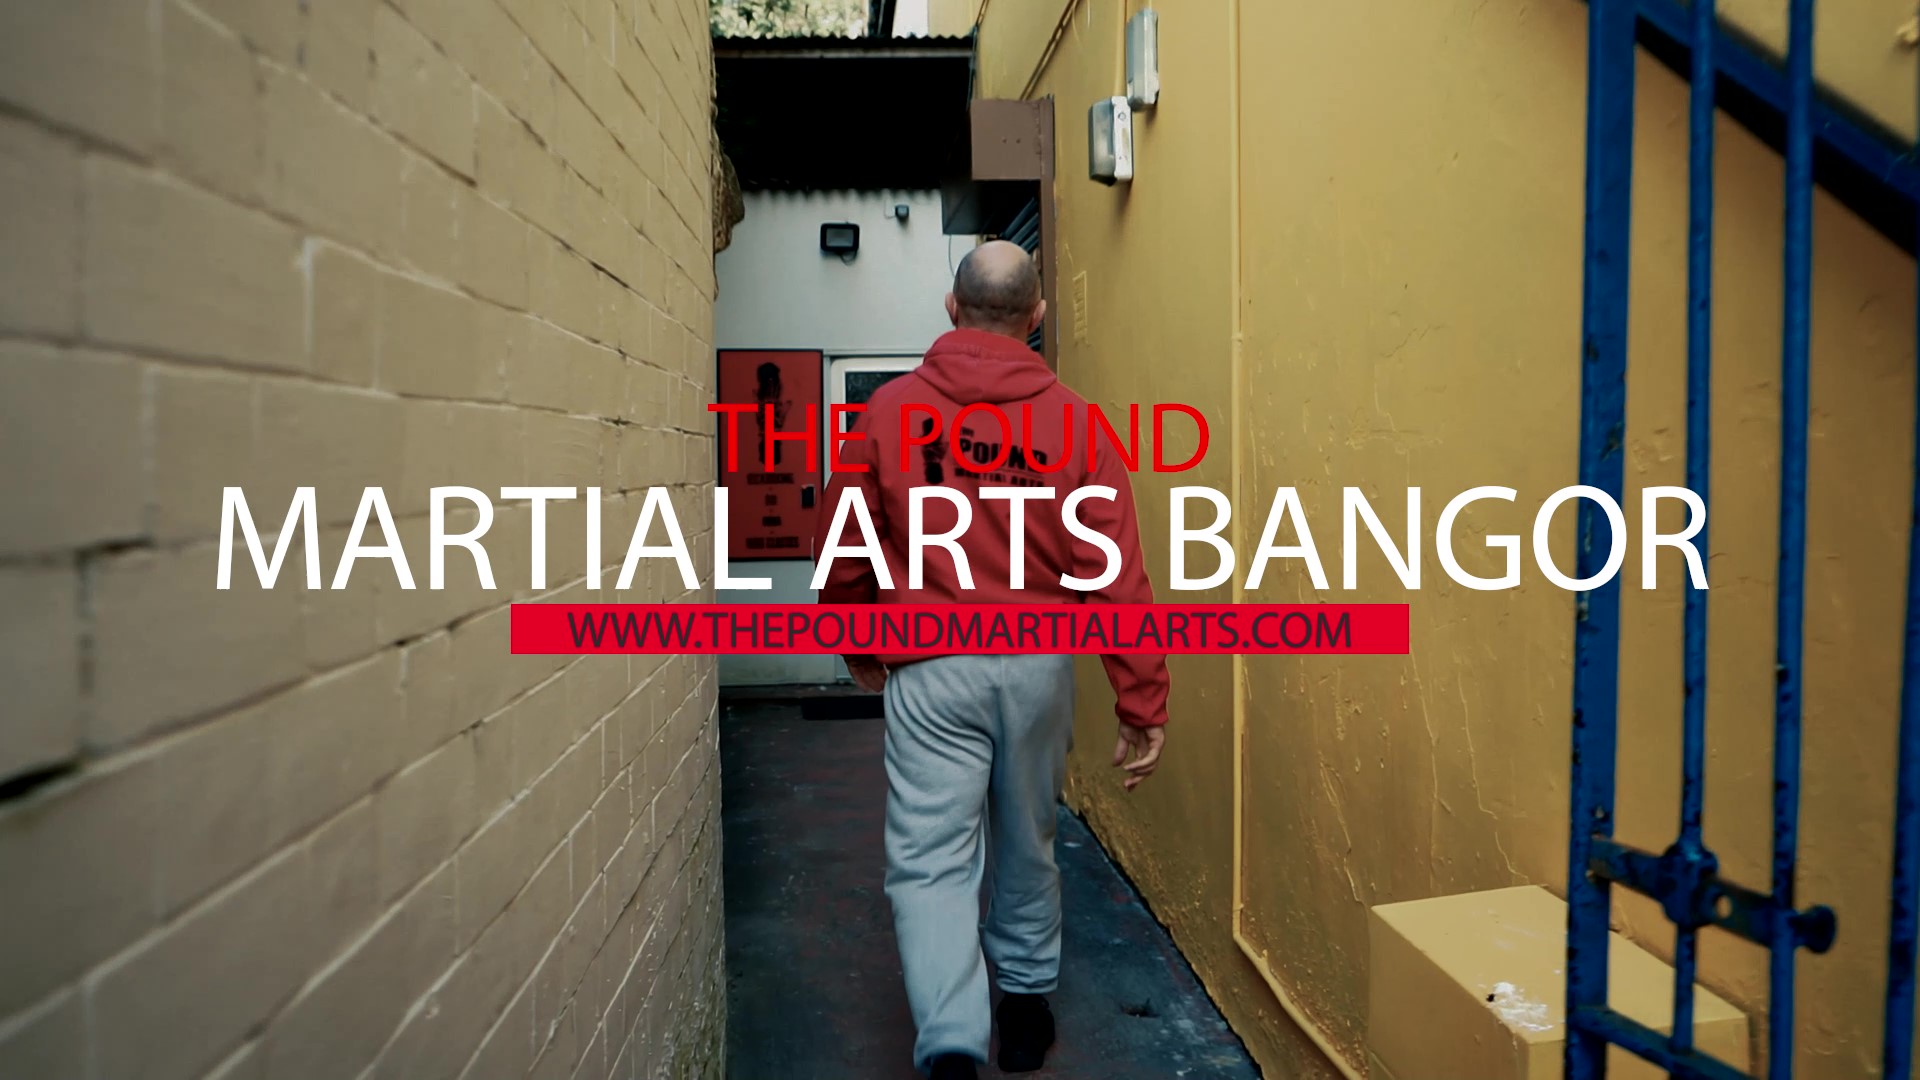 Pound Martial Arts Bangor
 Video Production